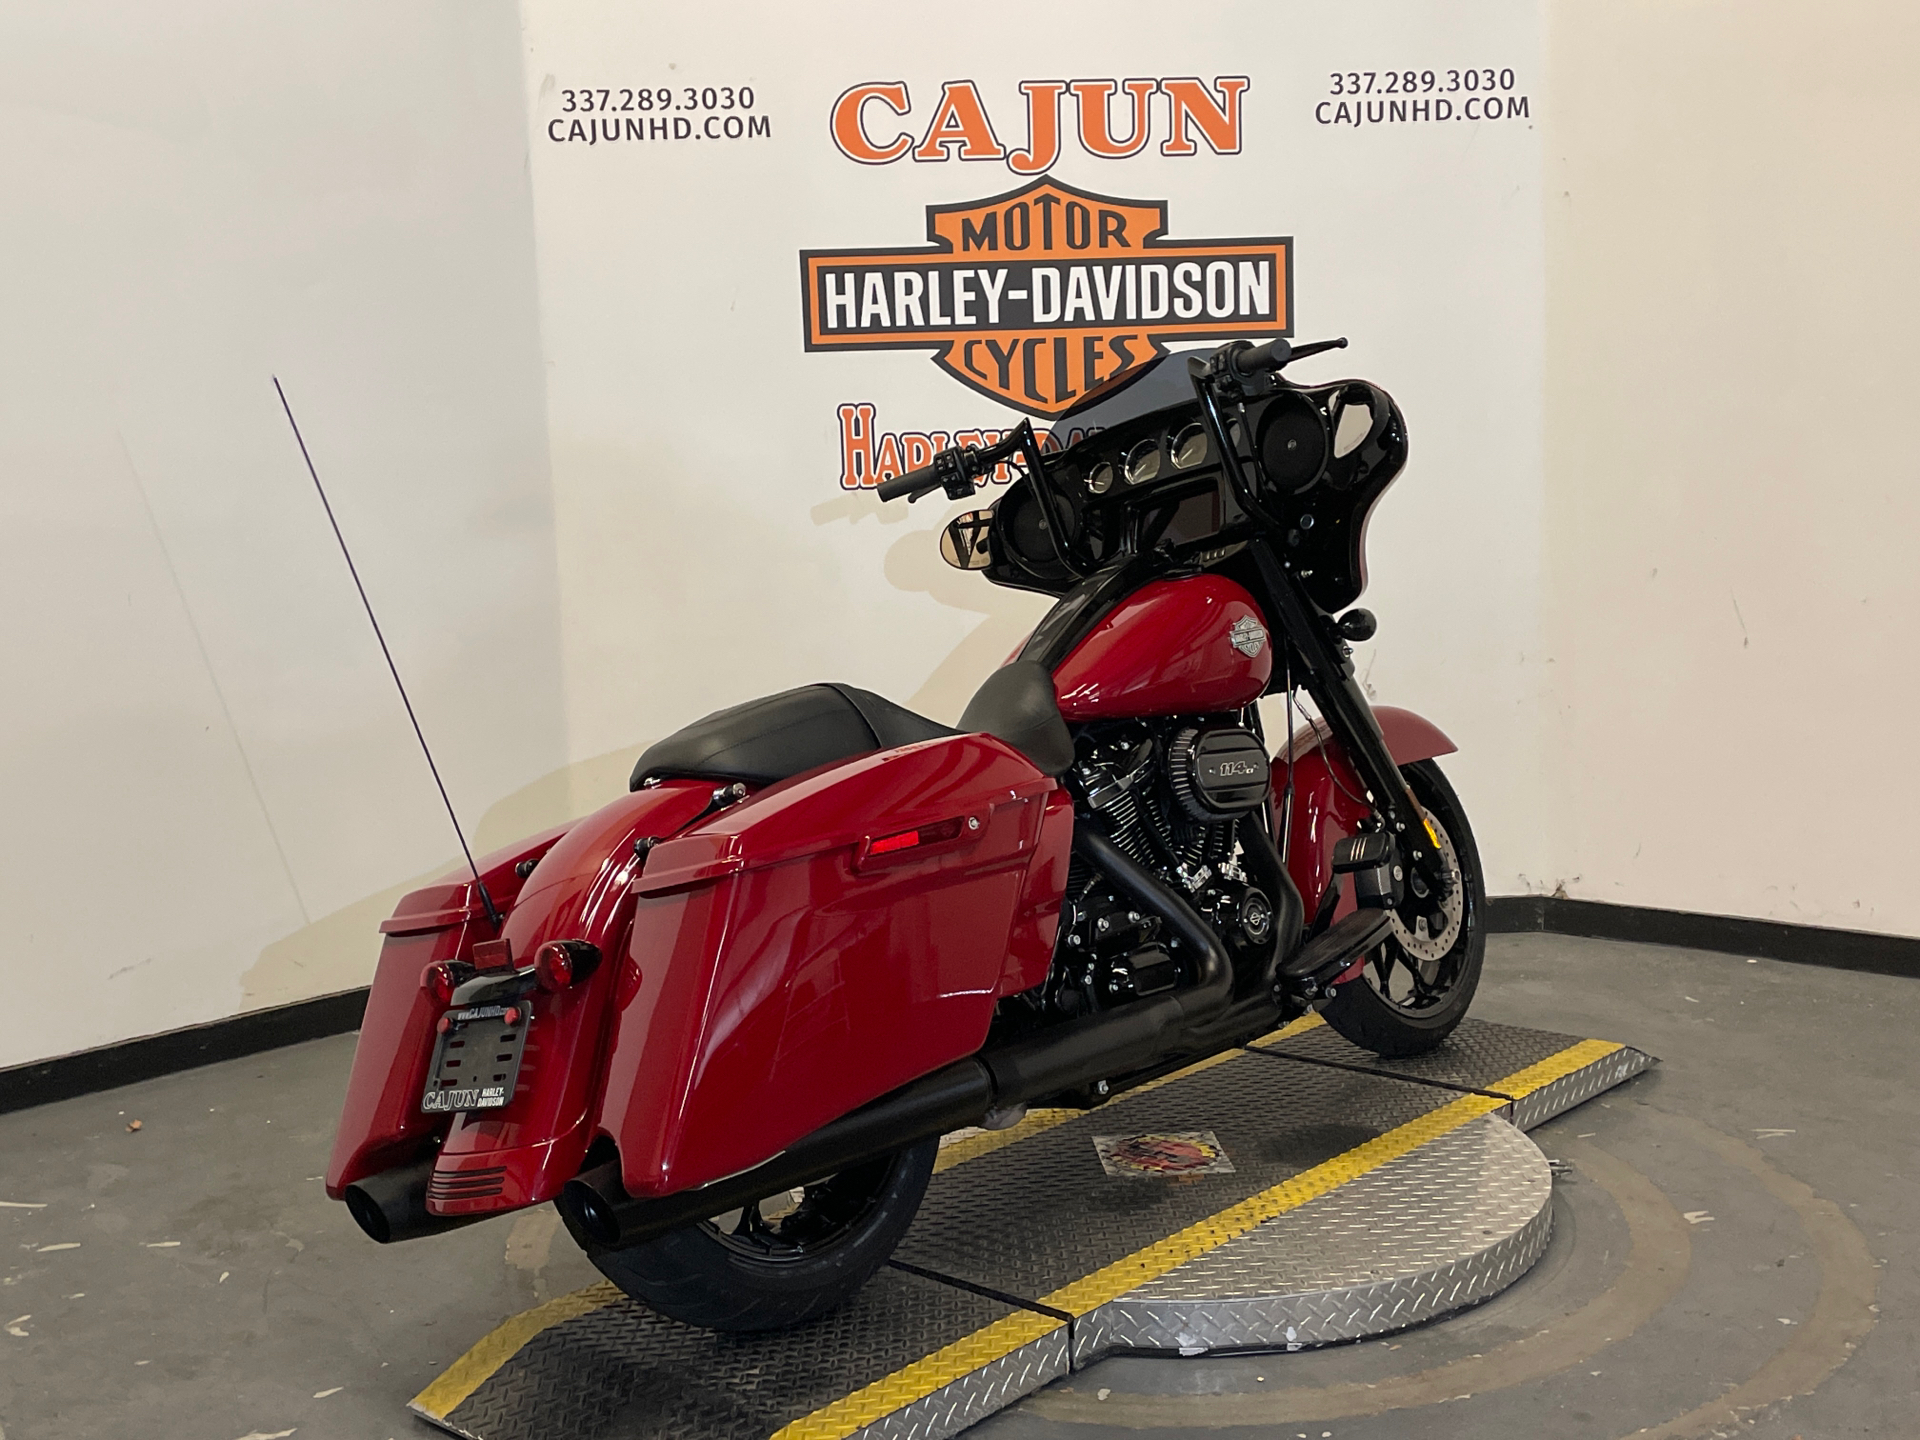 2021 Harley-Davidson Road Glide Special for sale - Photo 6